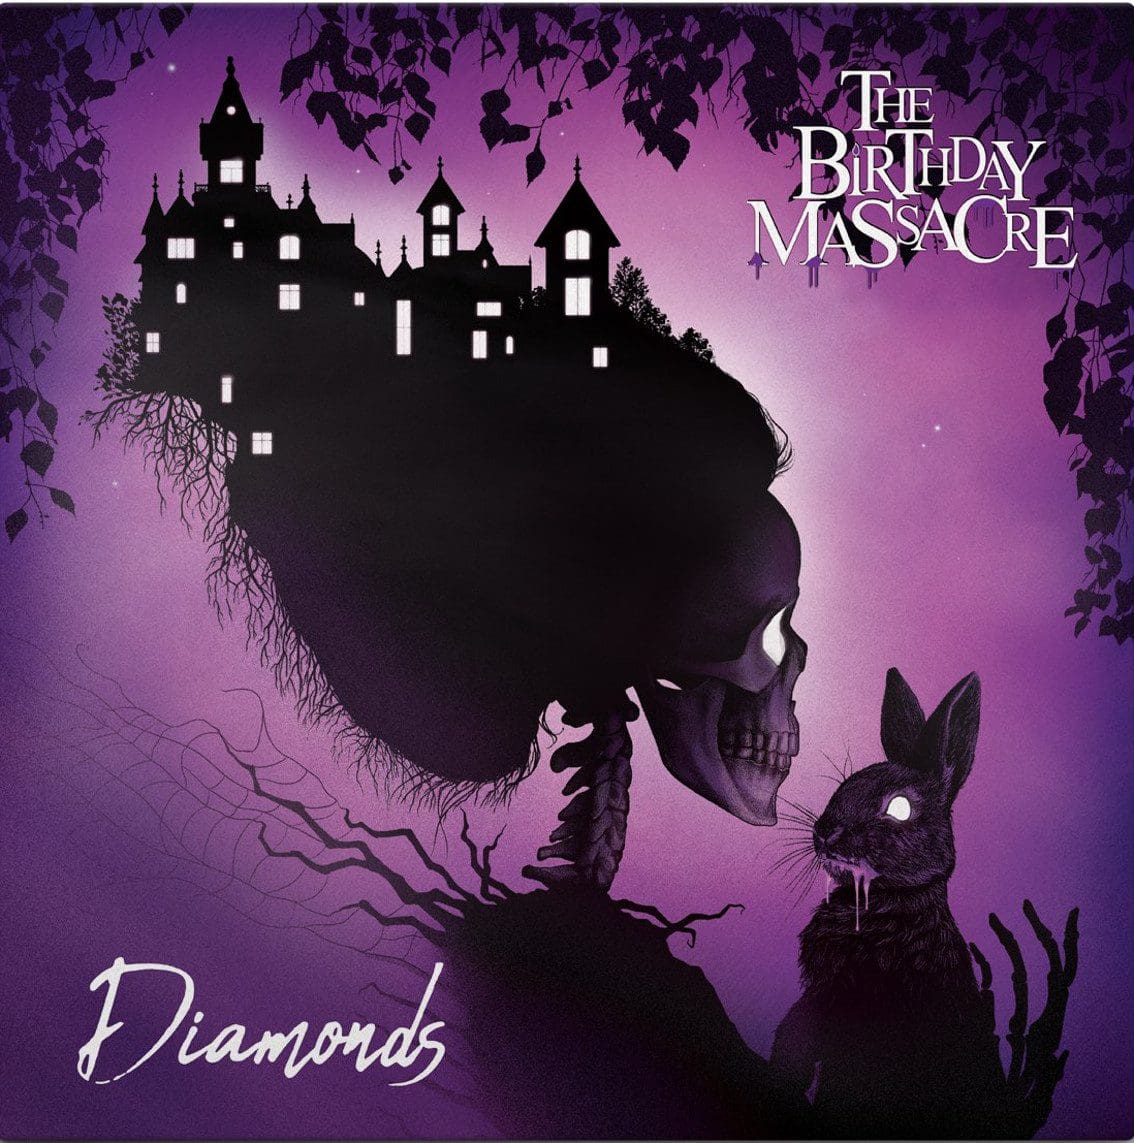 The Birthday Massacre launches all new album on March 27th: 'Diamonds'